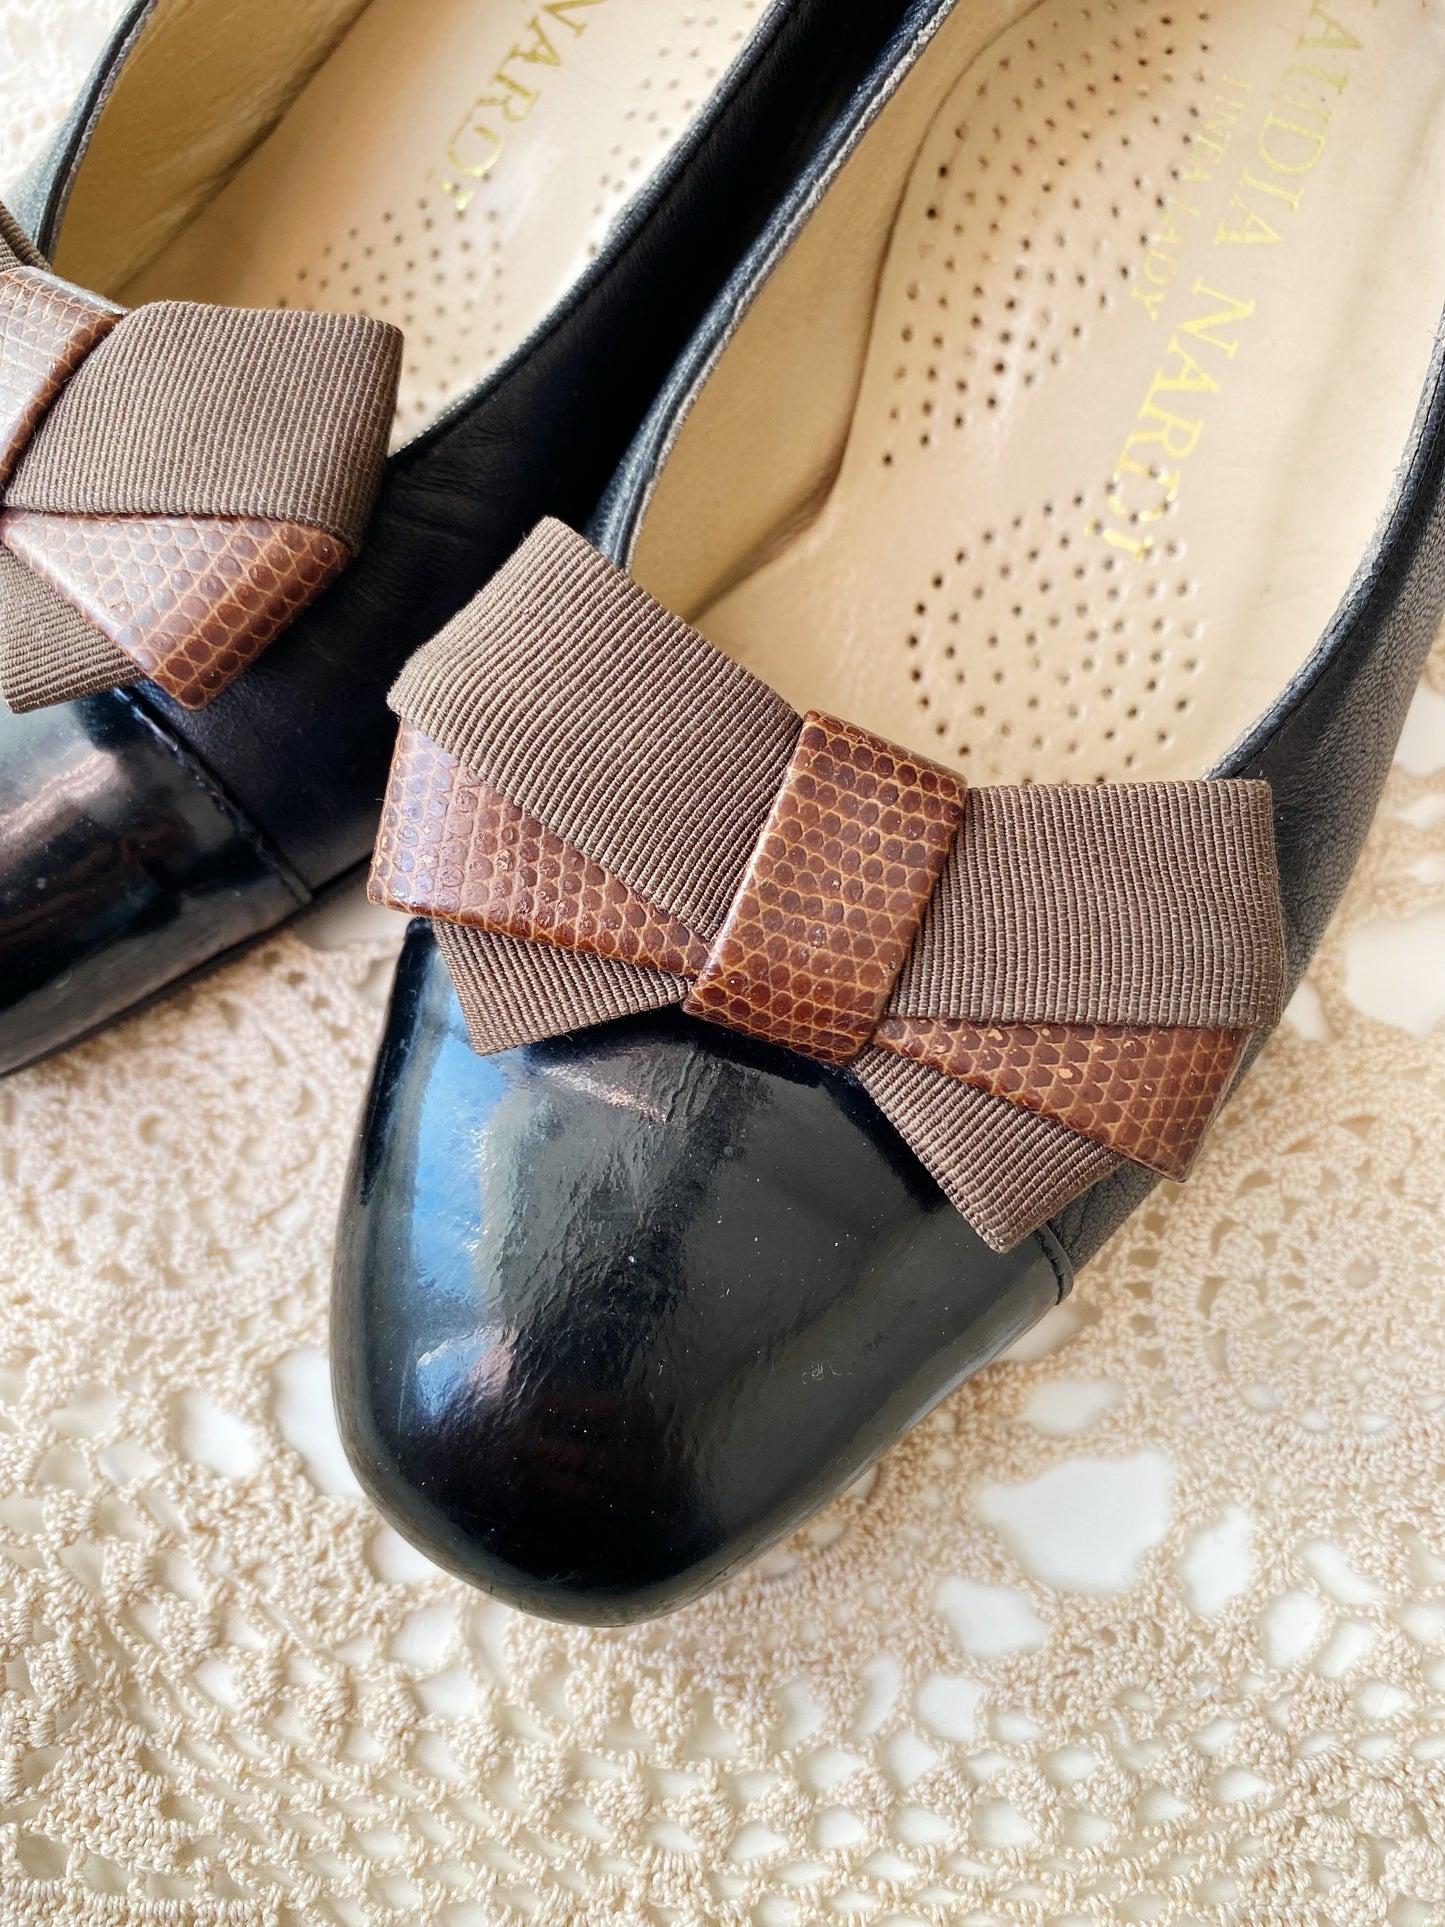 Vintage Shoe Clips